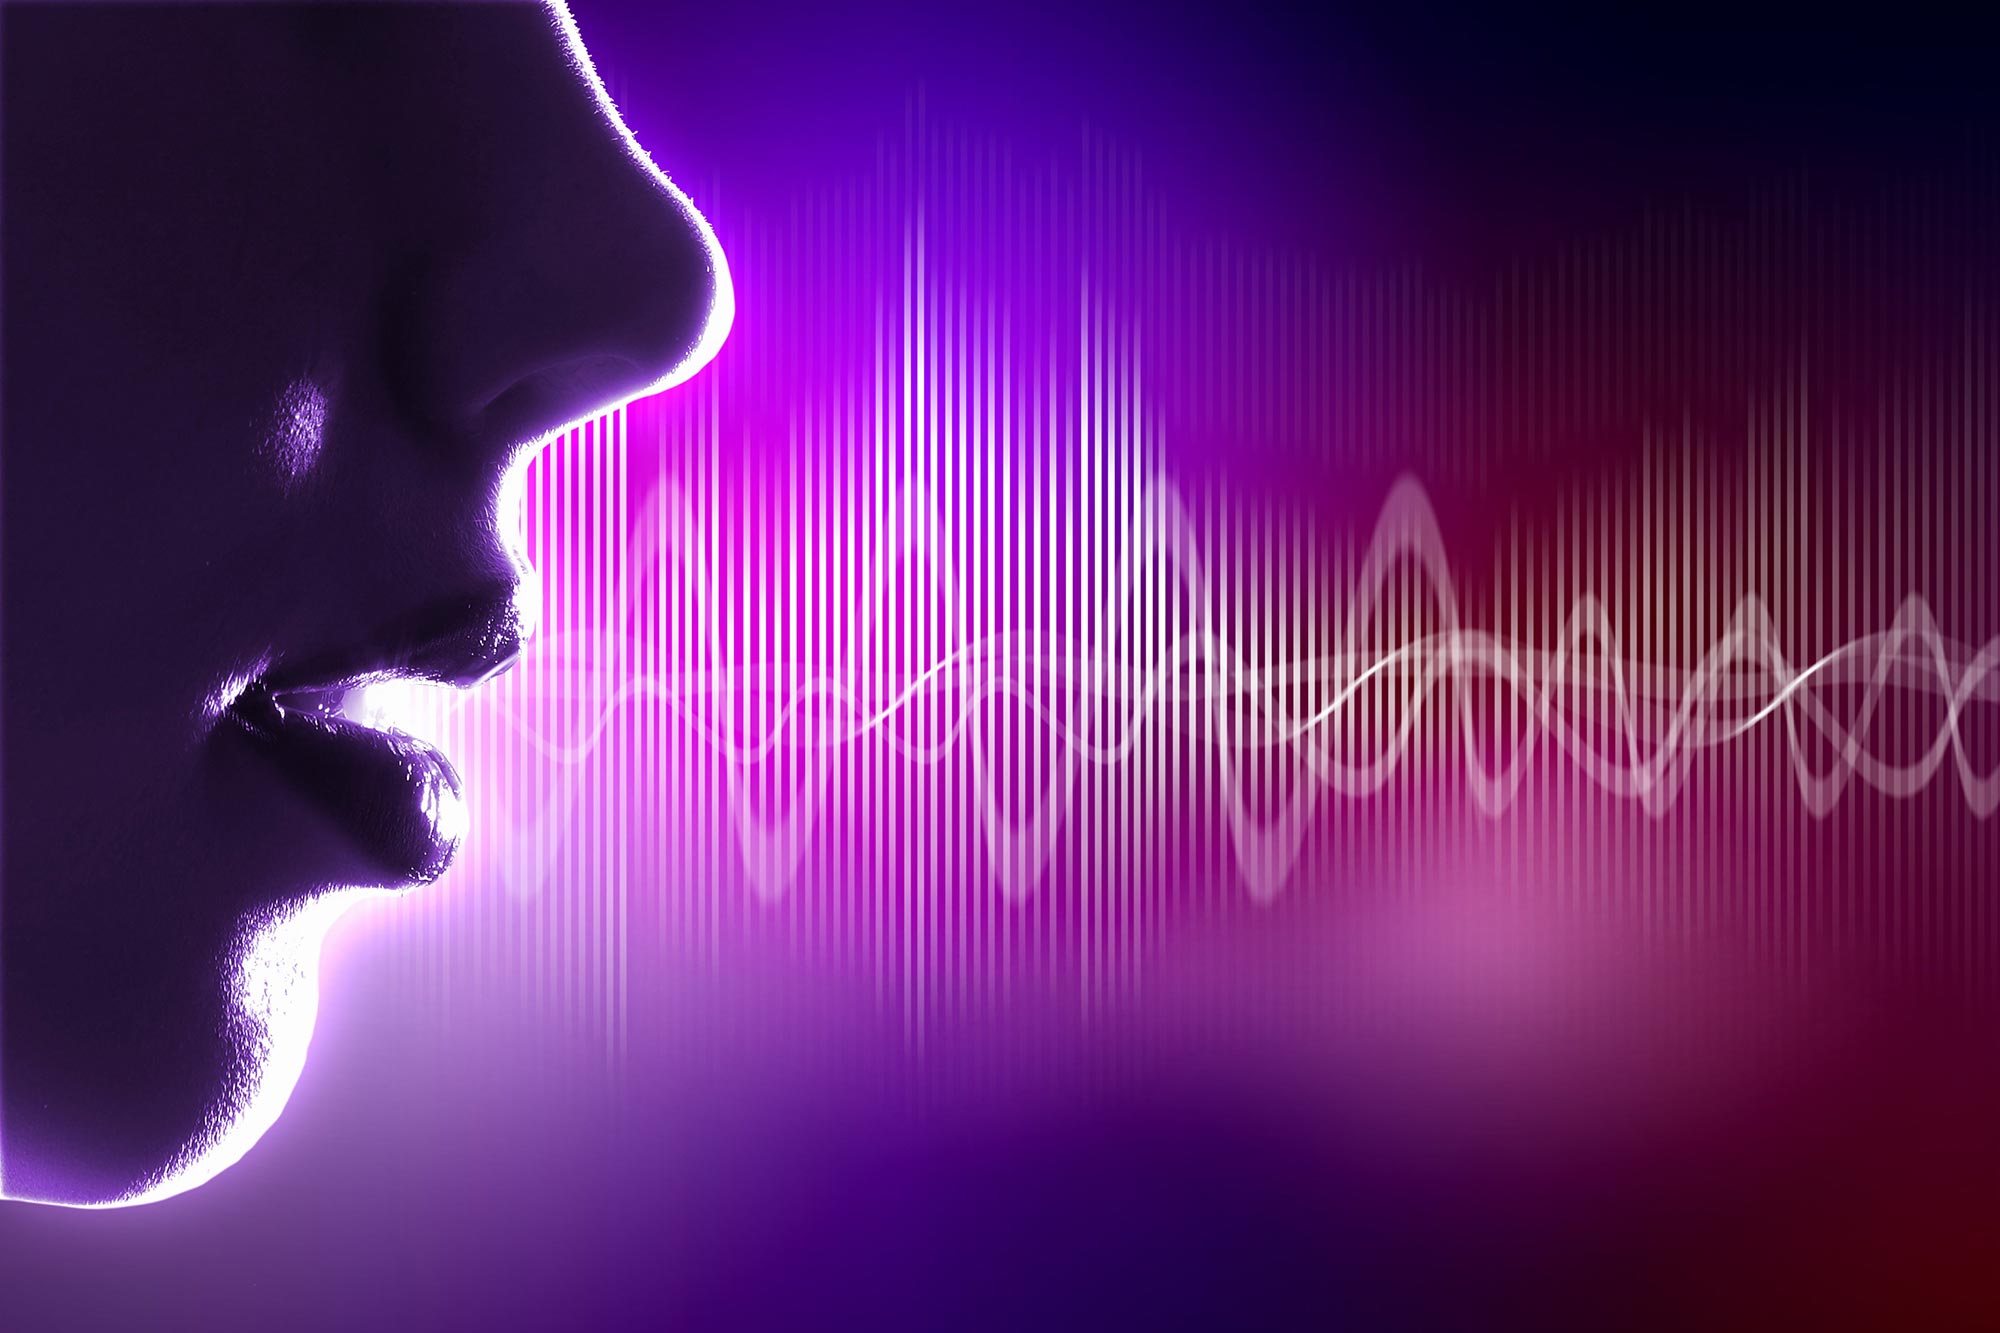 Speech Sound Waves Concept Illustration